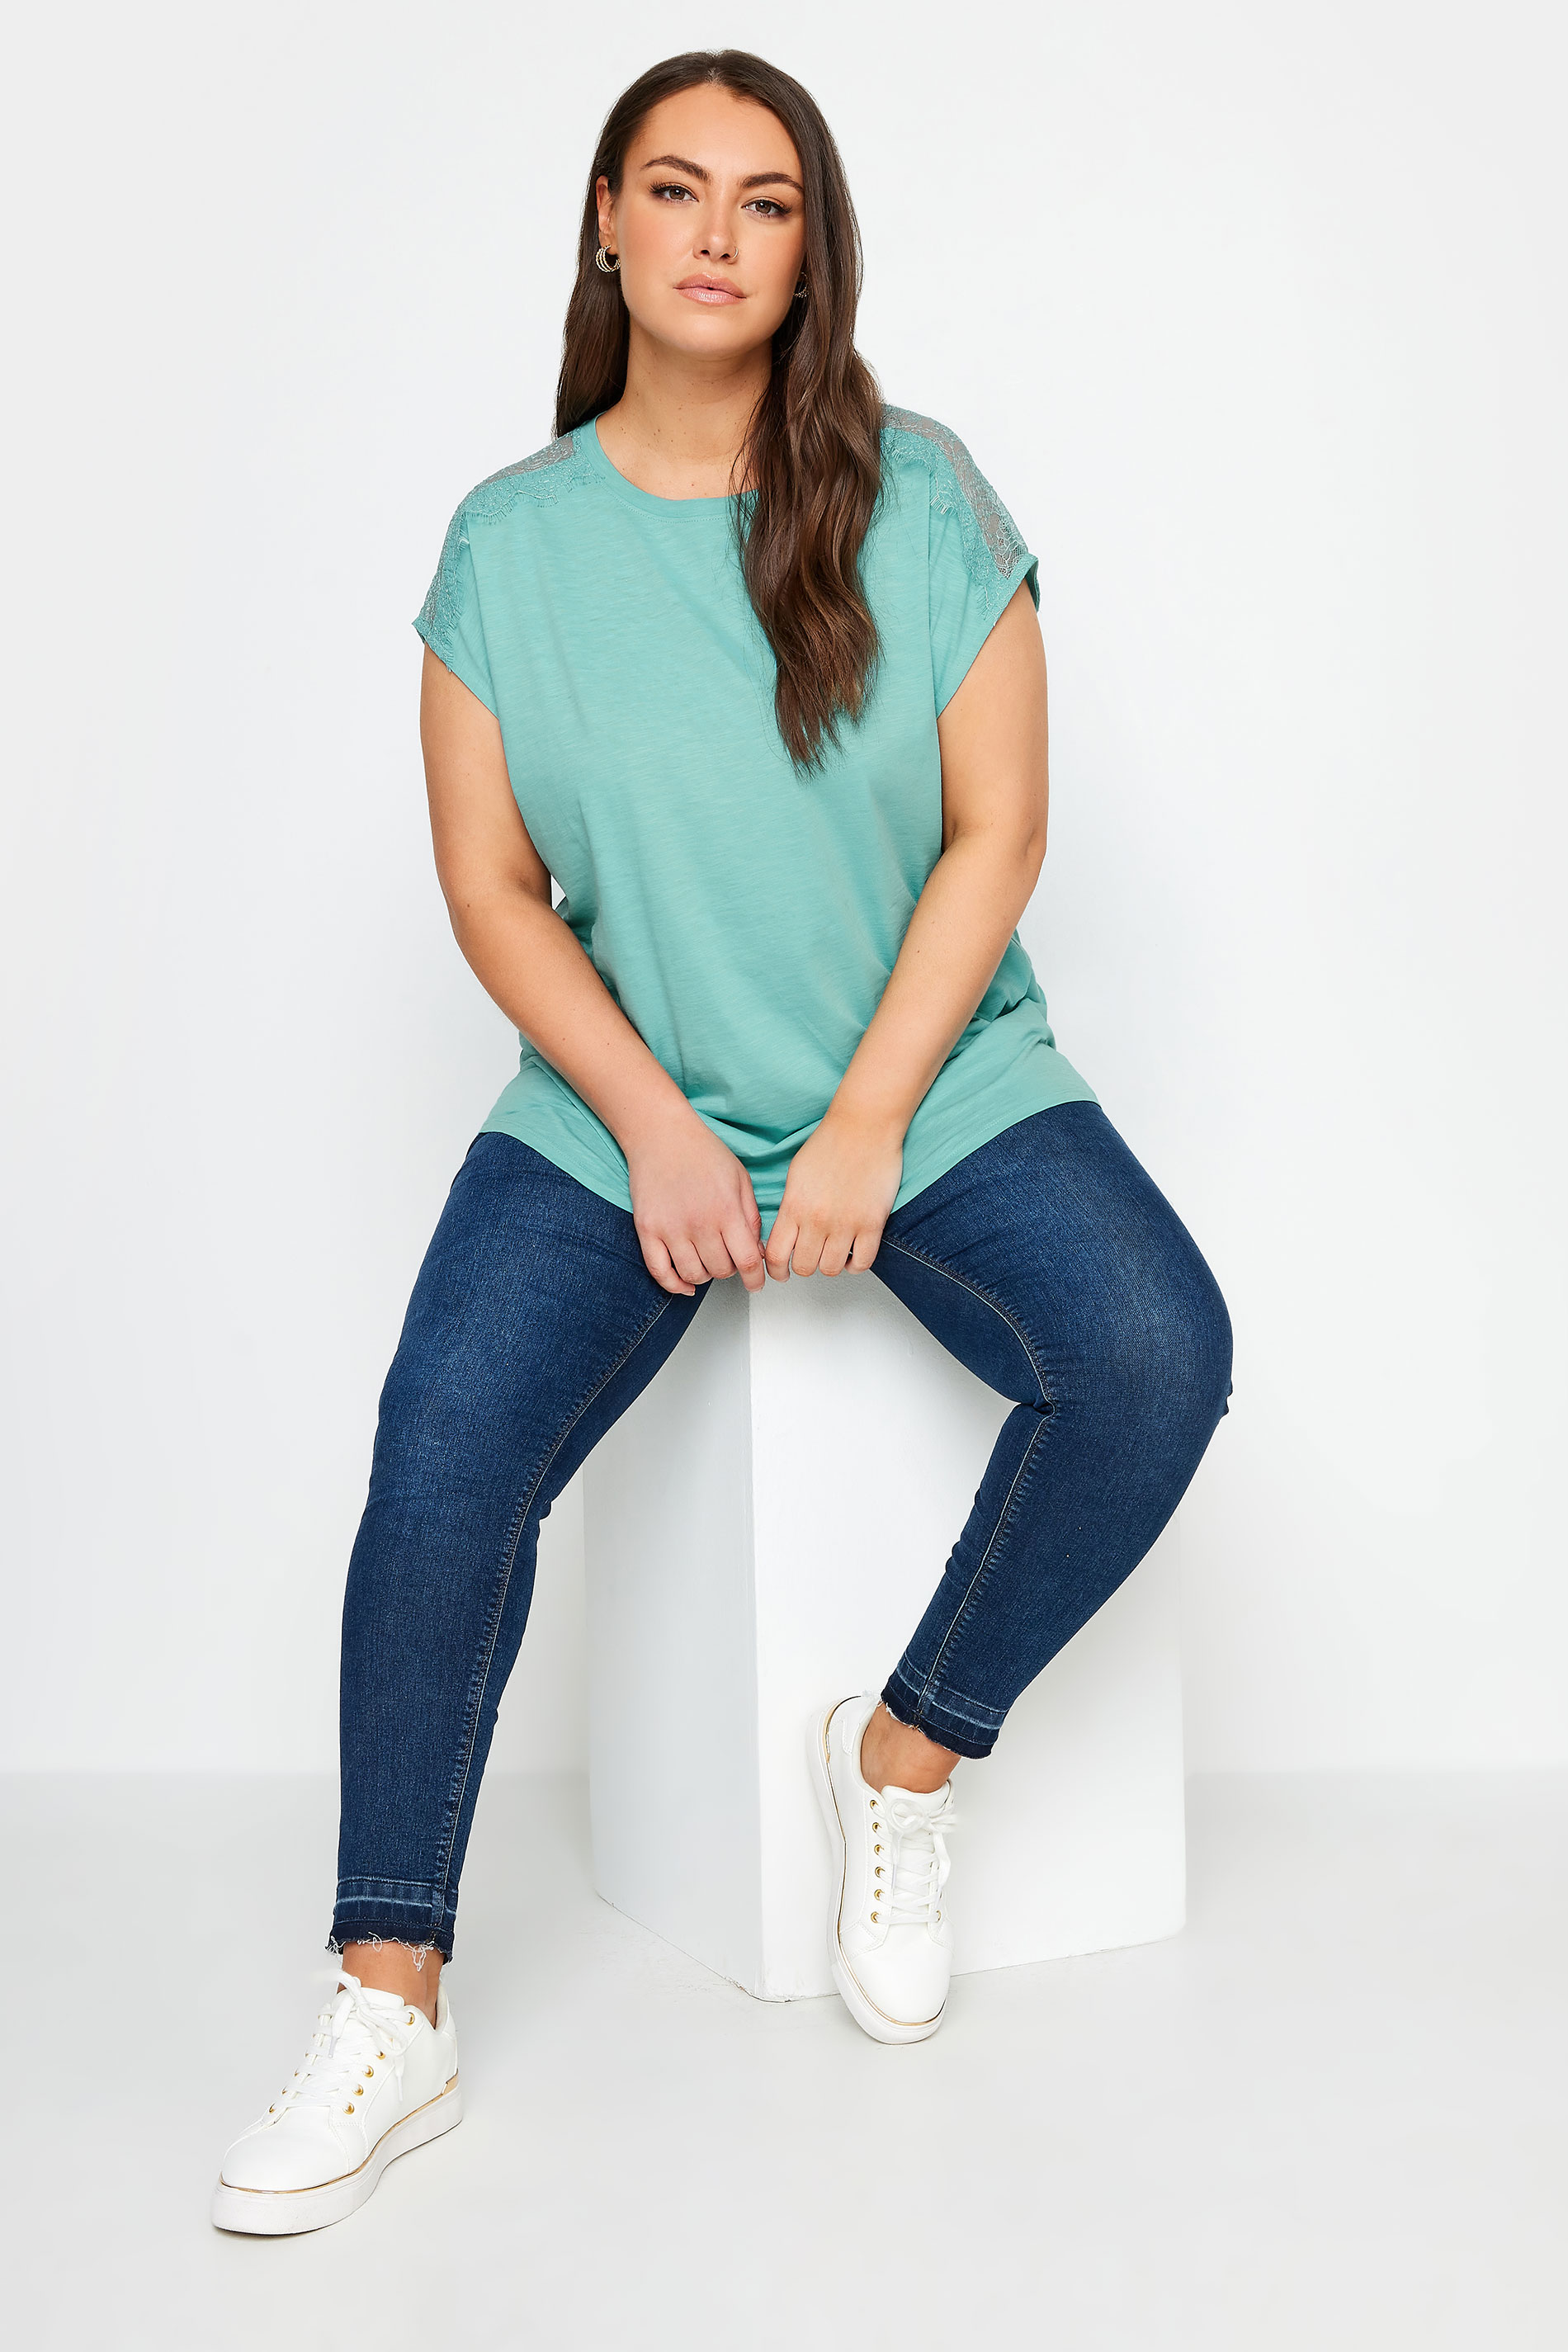 YOURS Plus Size Blue Lace Shoulder T-Shirt | Yours Clothing 2